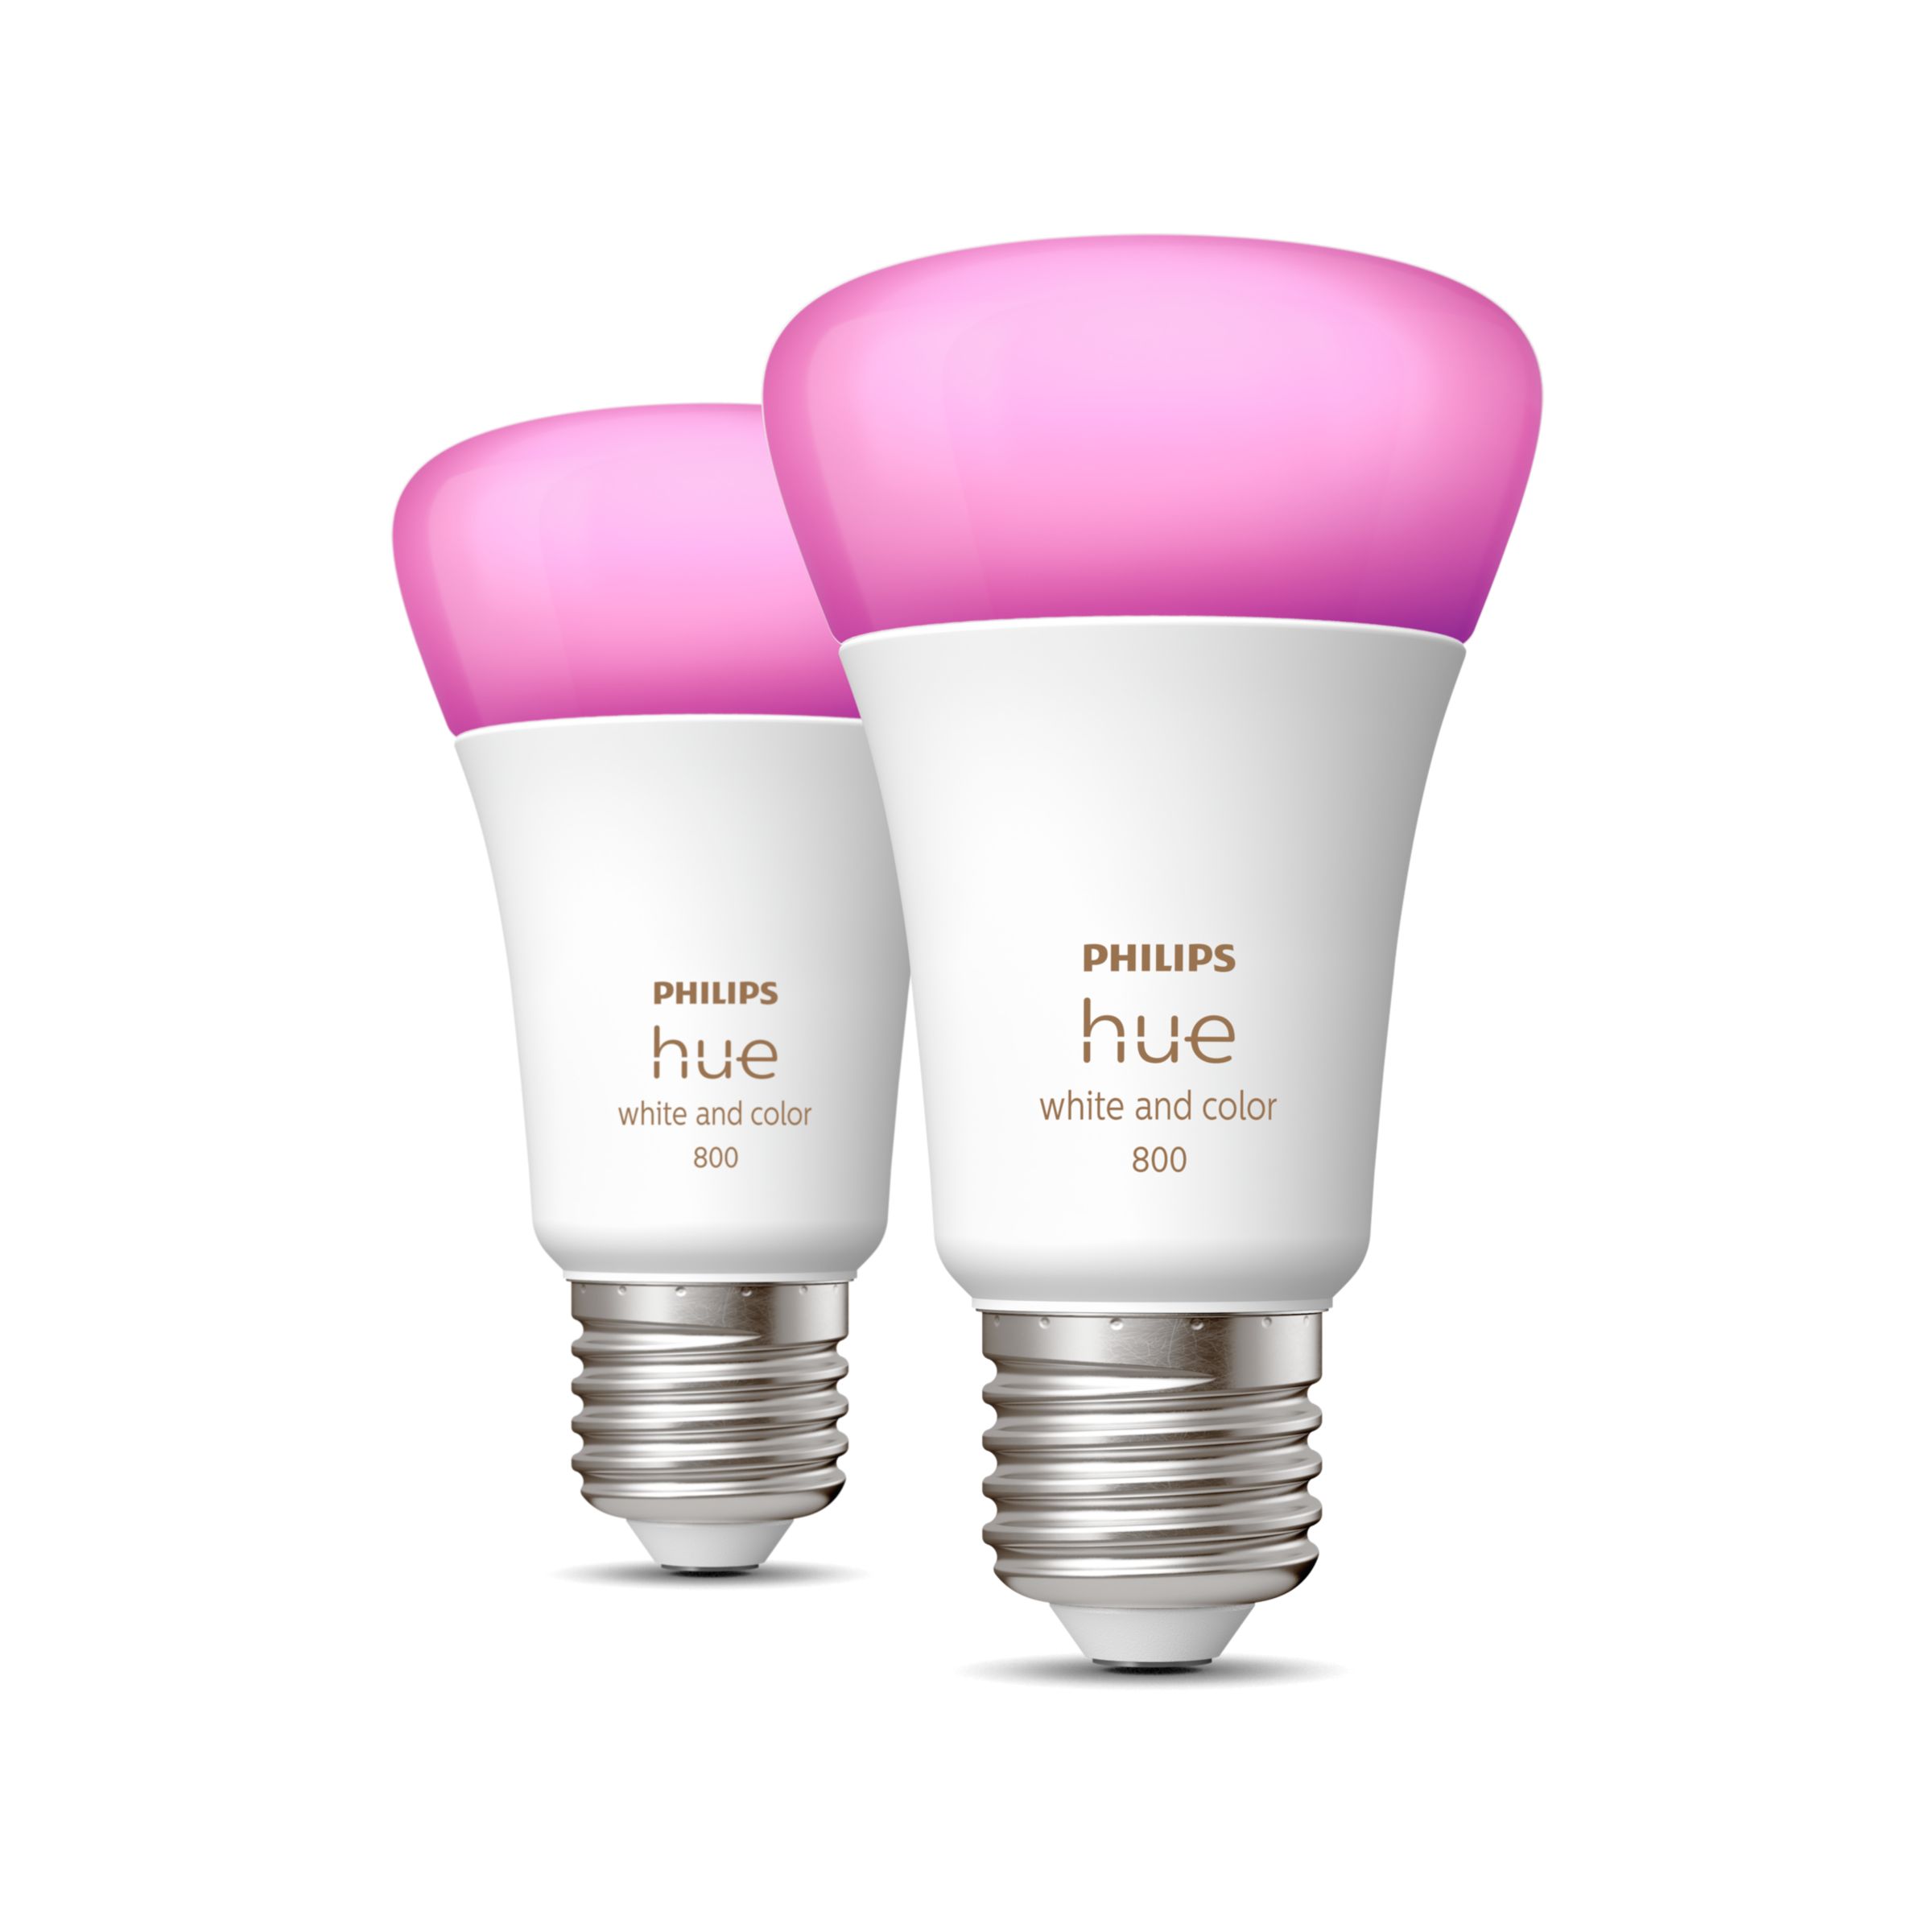 Hue White and Colour E27 smart bulb – 800 (2-pack) | Philips Hue UK